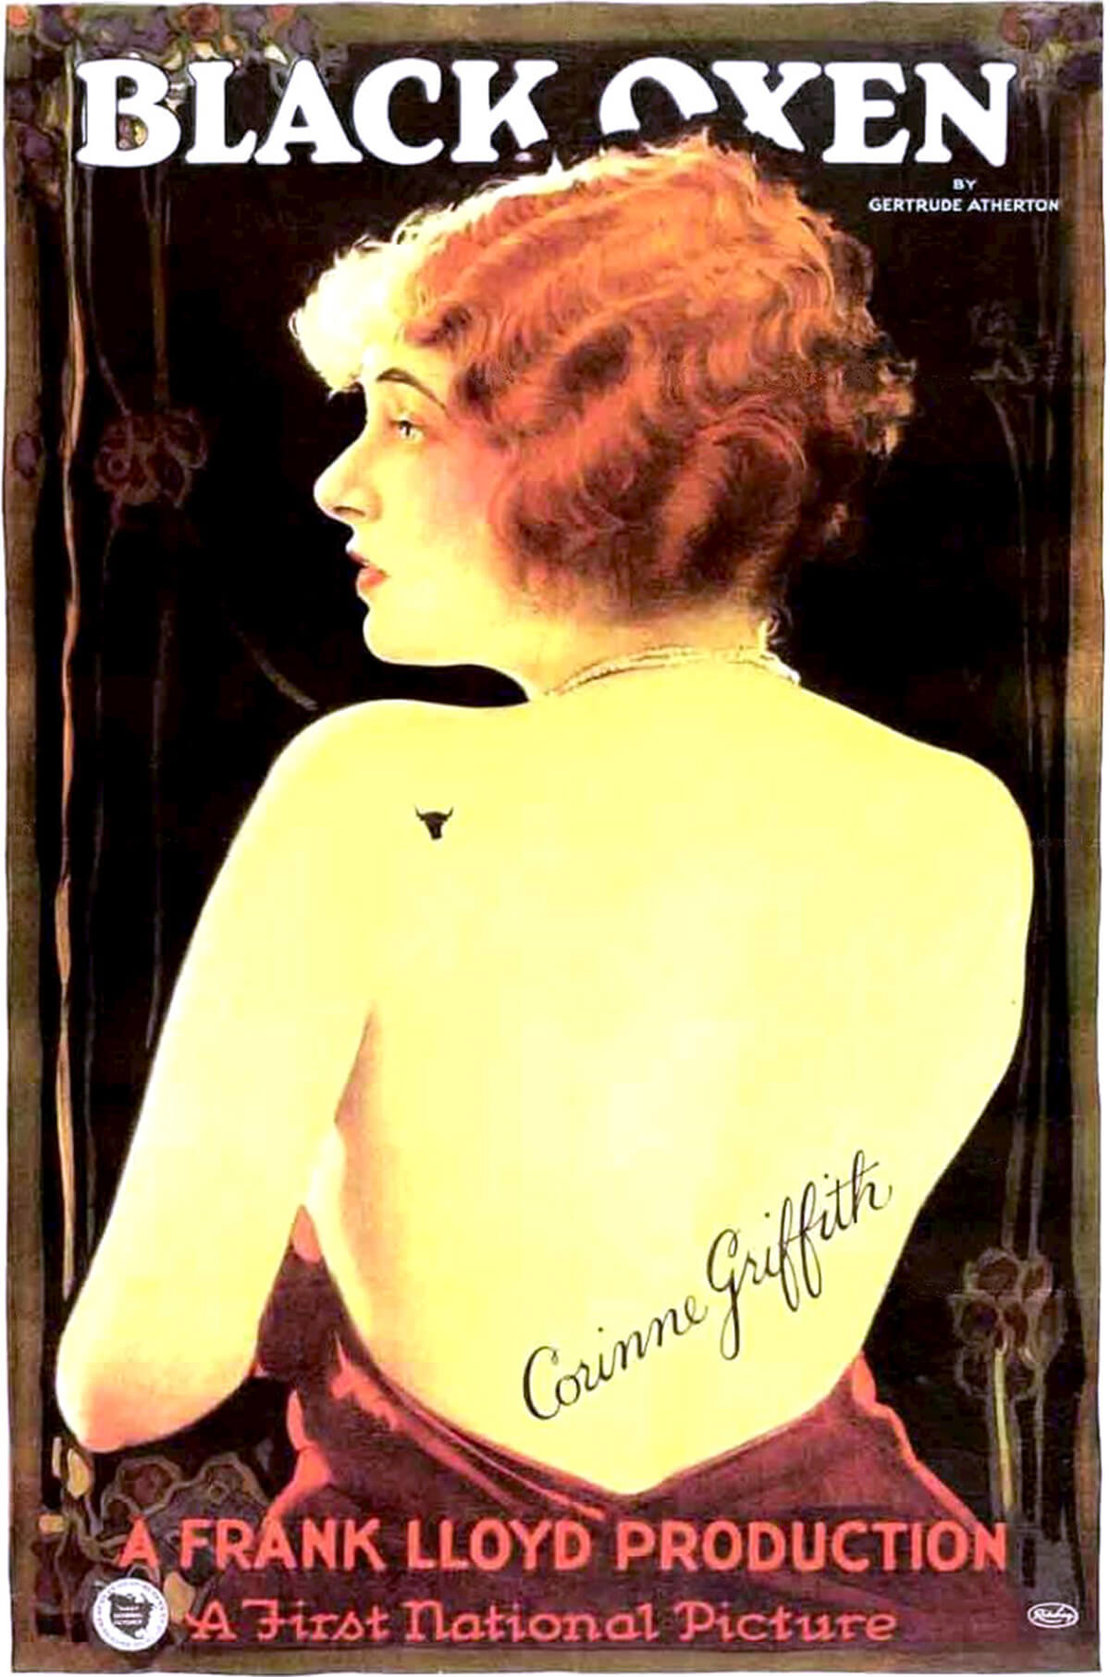 Plakat zur Verfilmung von Gertrude Athertons vieldiskutierten Roman „Black Oxen“, Regie: Frank Lloyd, Wikimedia Commons 